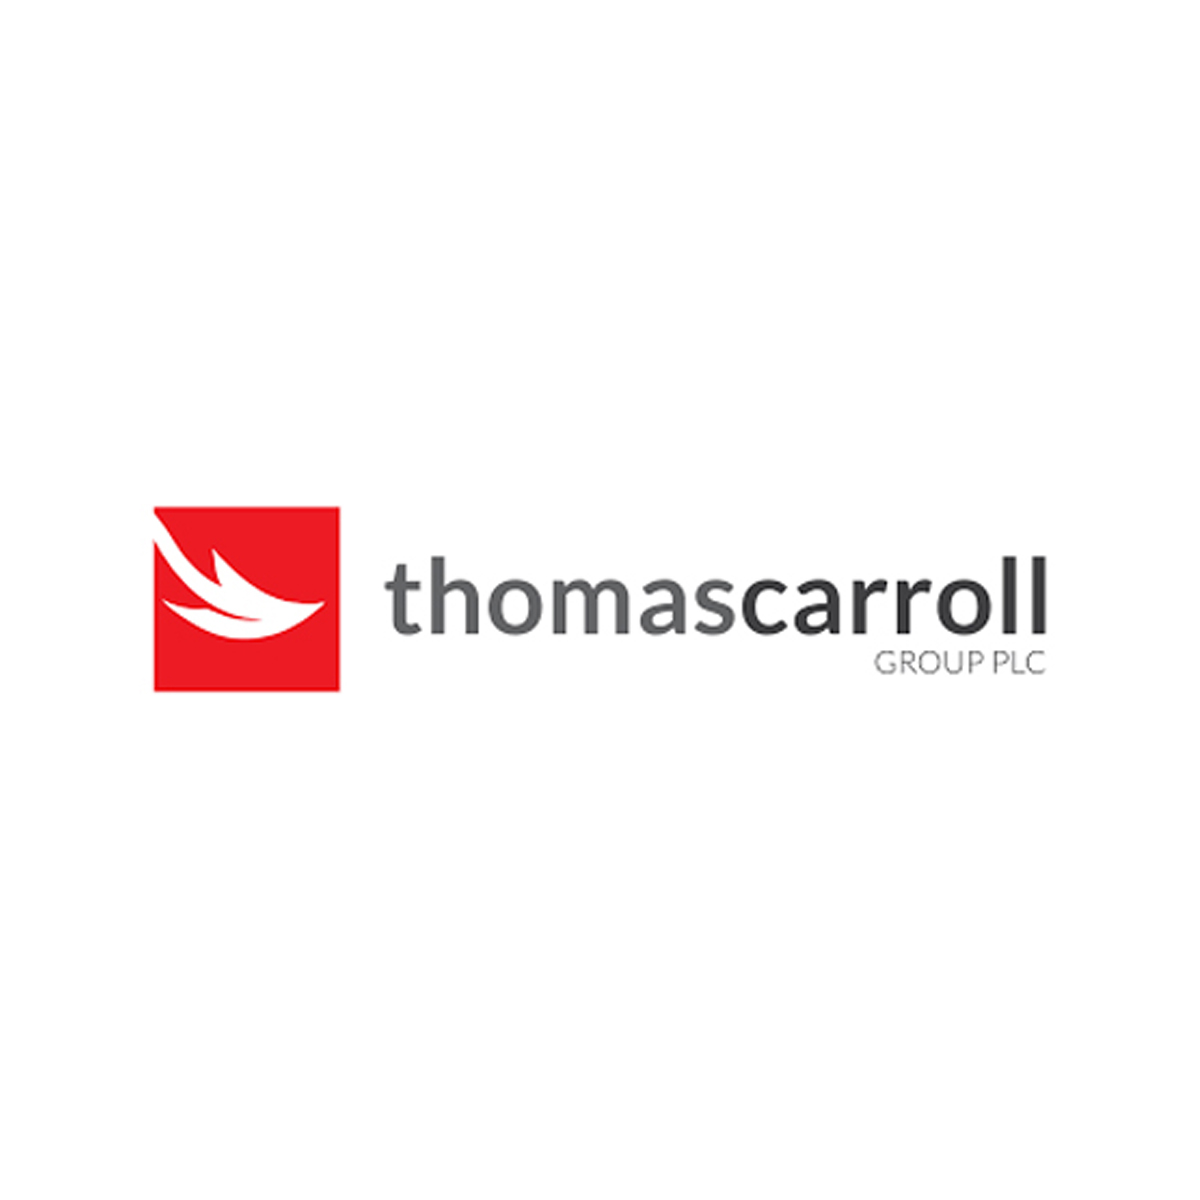 The Thomas Carroll logo